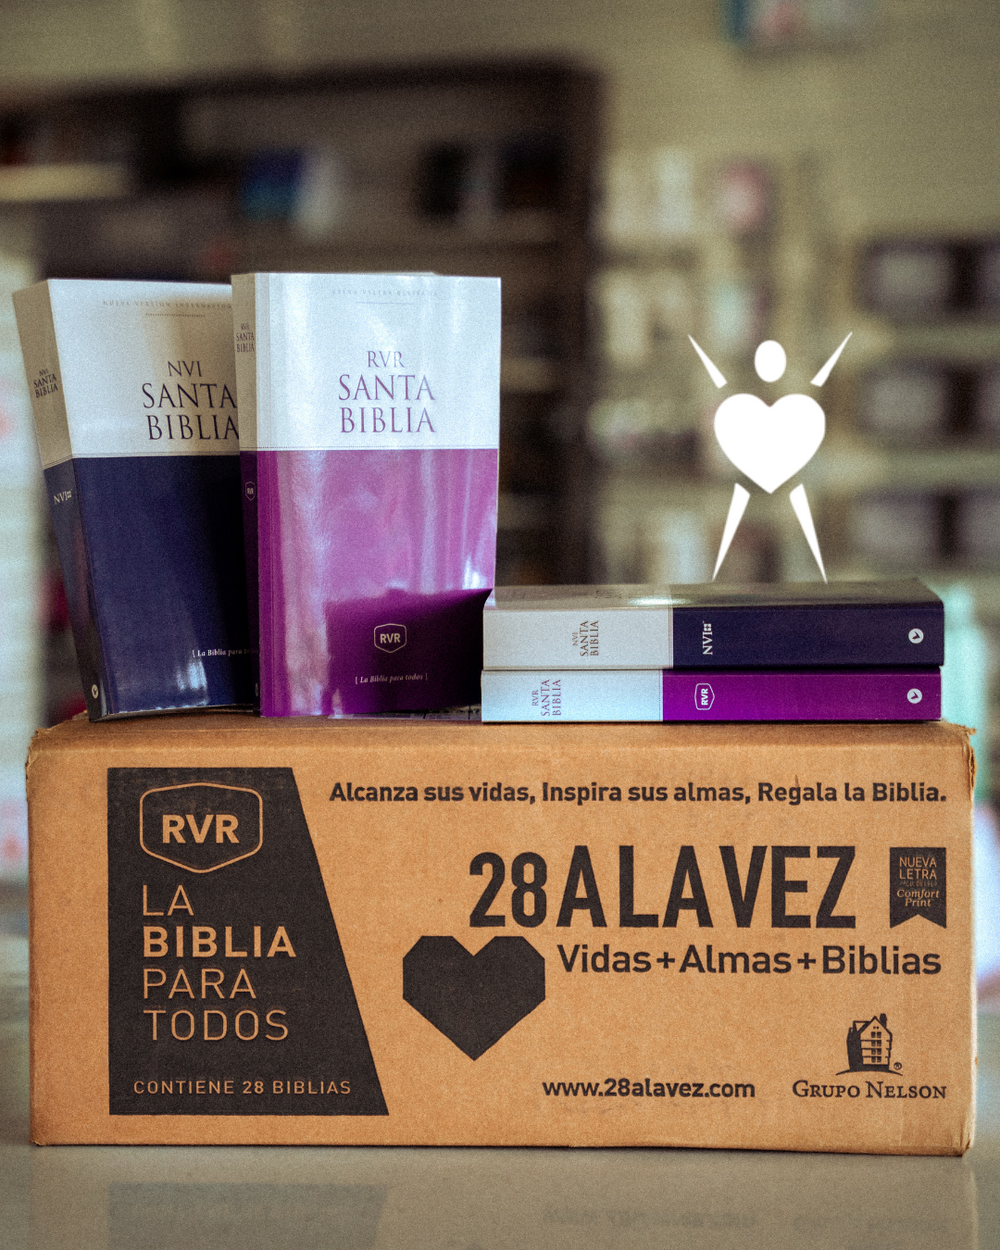 Santa Biblia NVI - Edición económica / Caja de 28